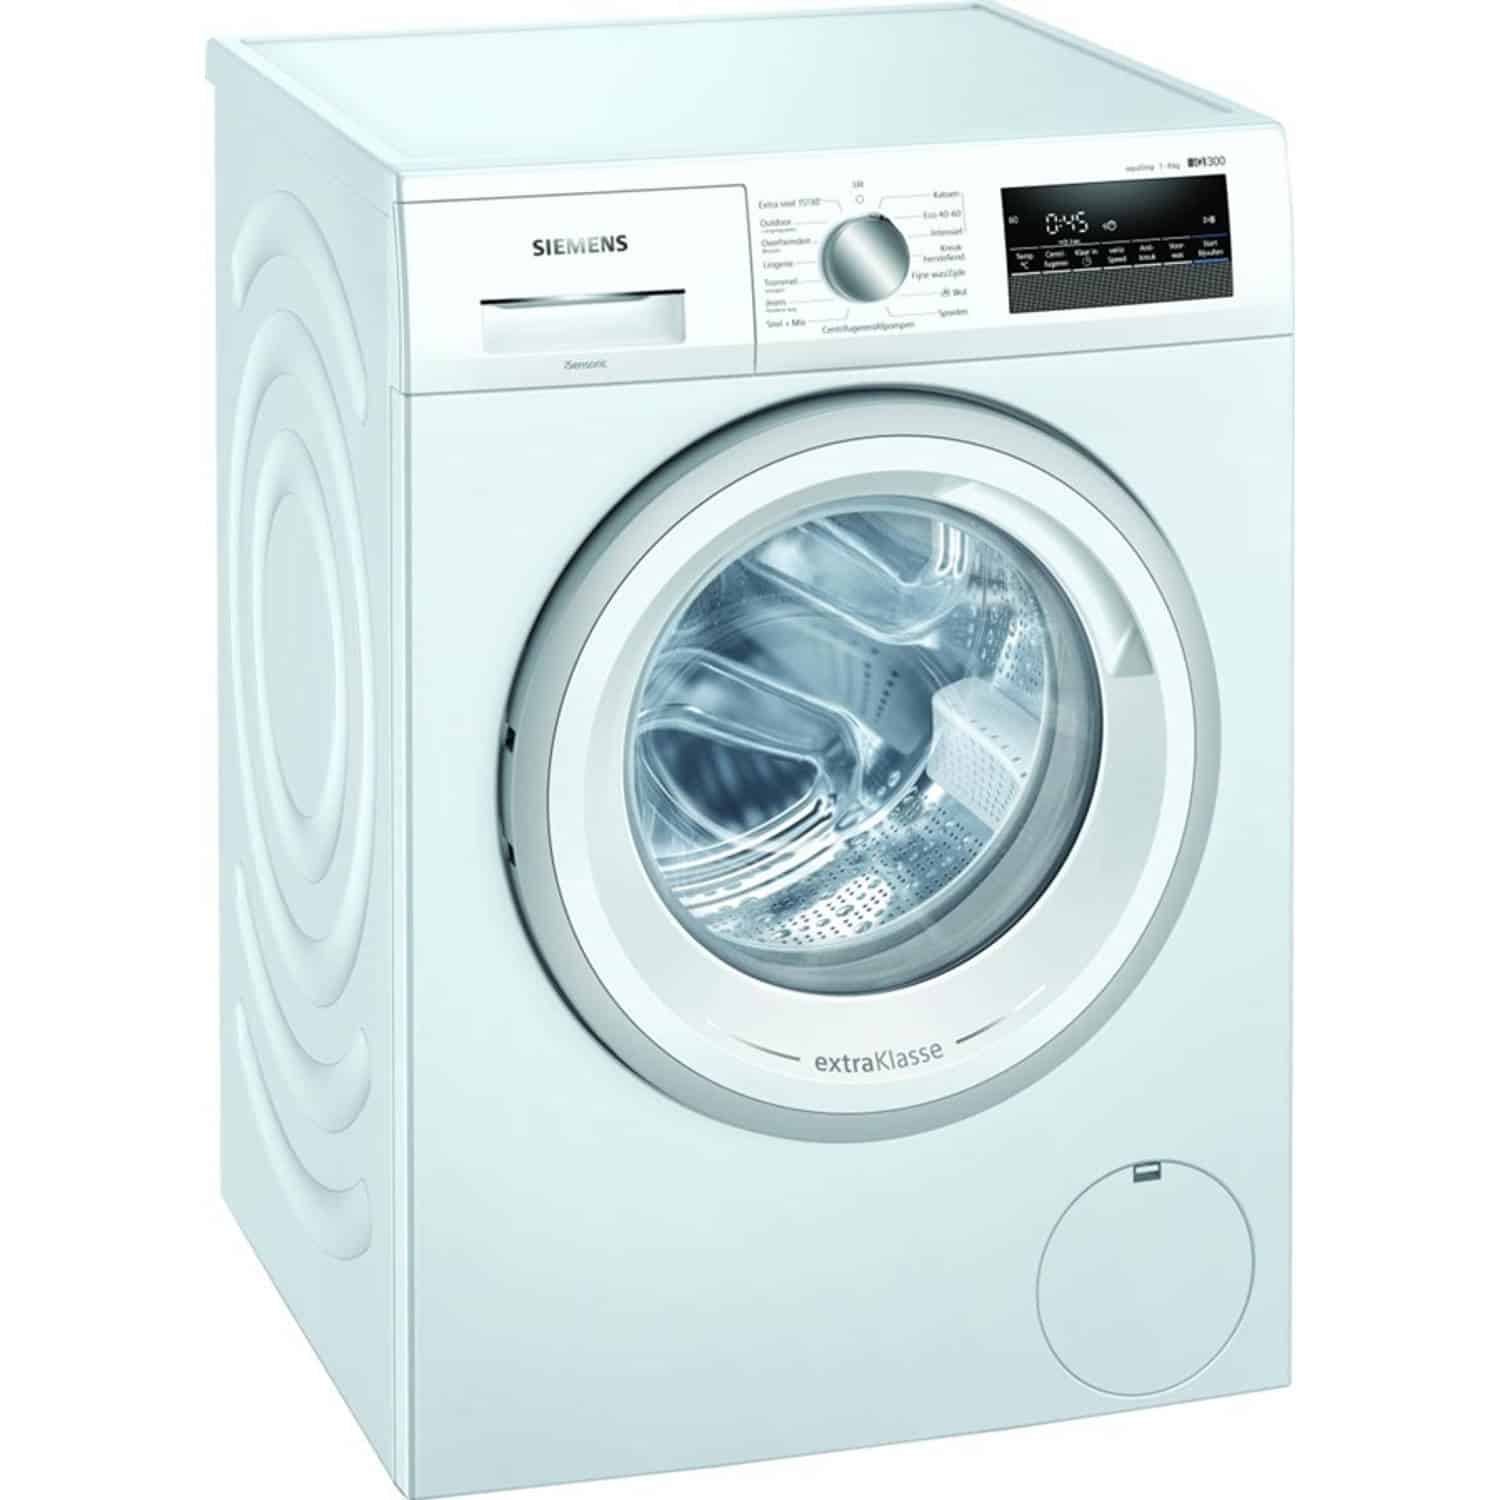 Siemens wasmachine storing doet niets meer, foutcode EH0, EHO, EHE